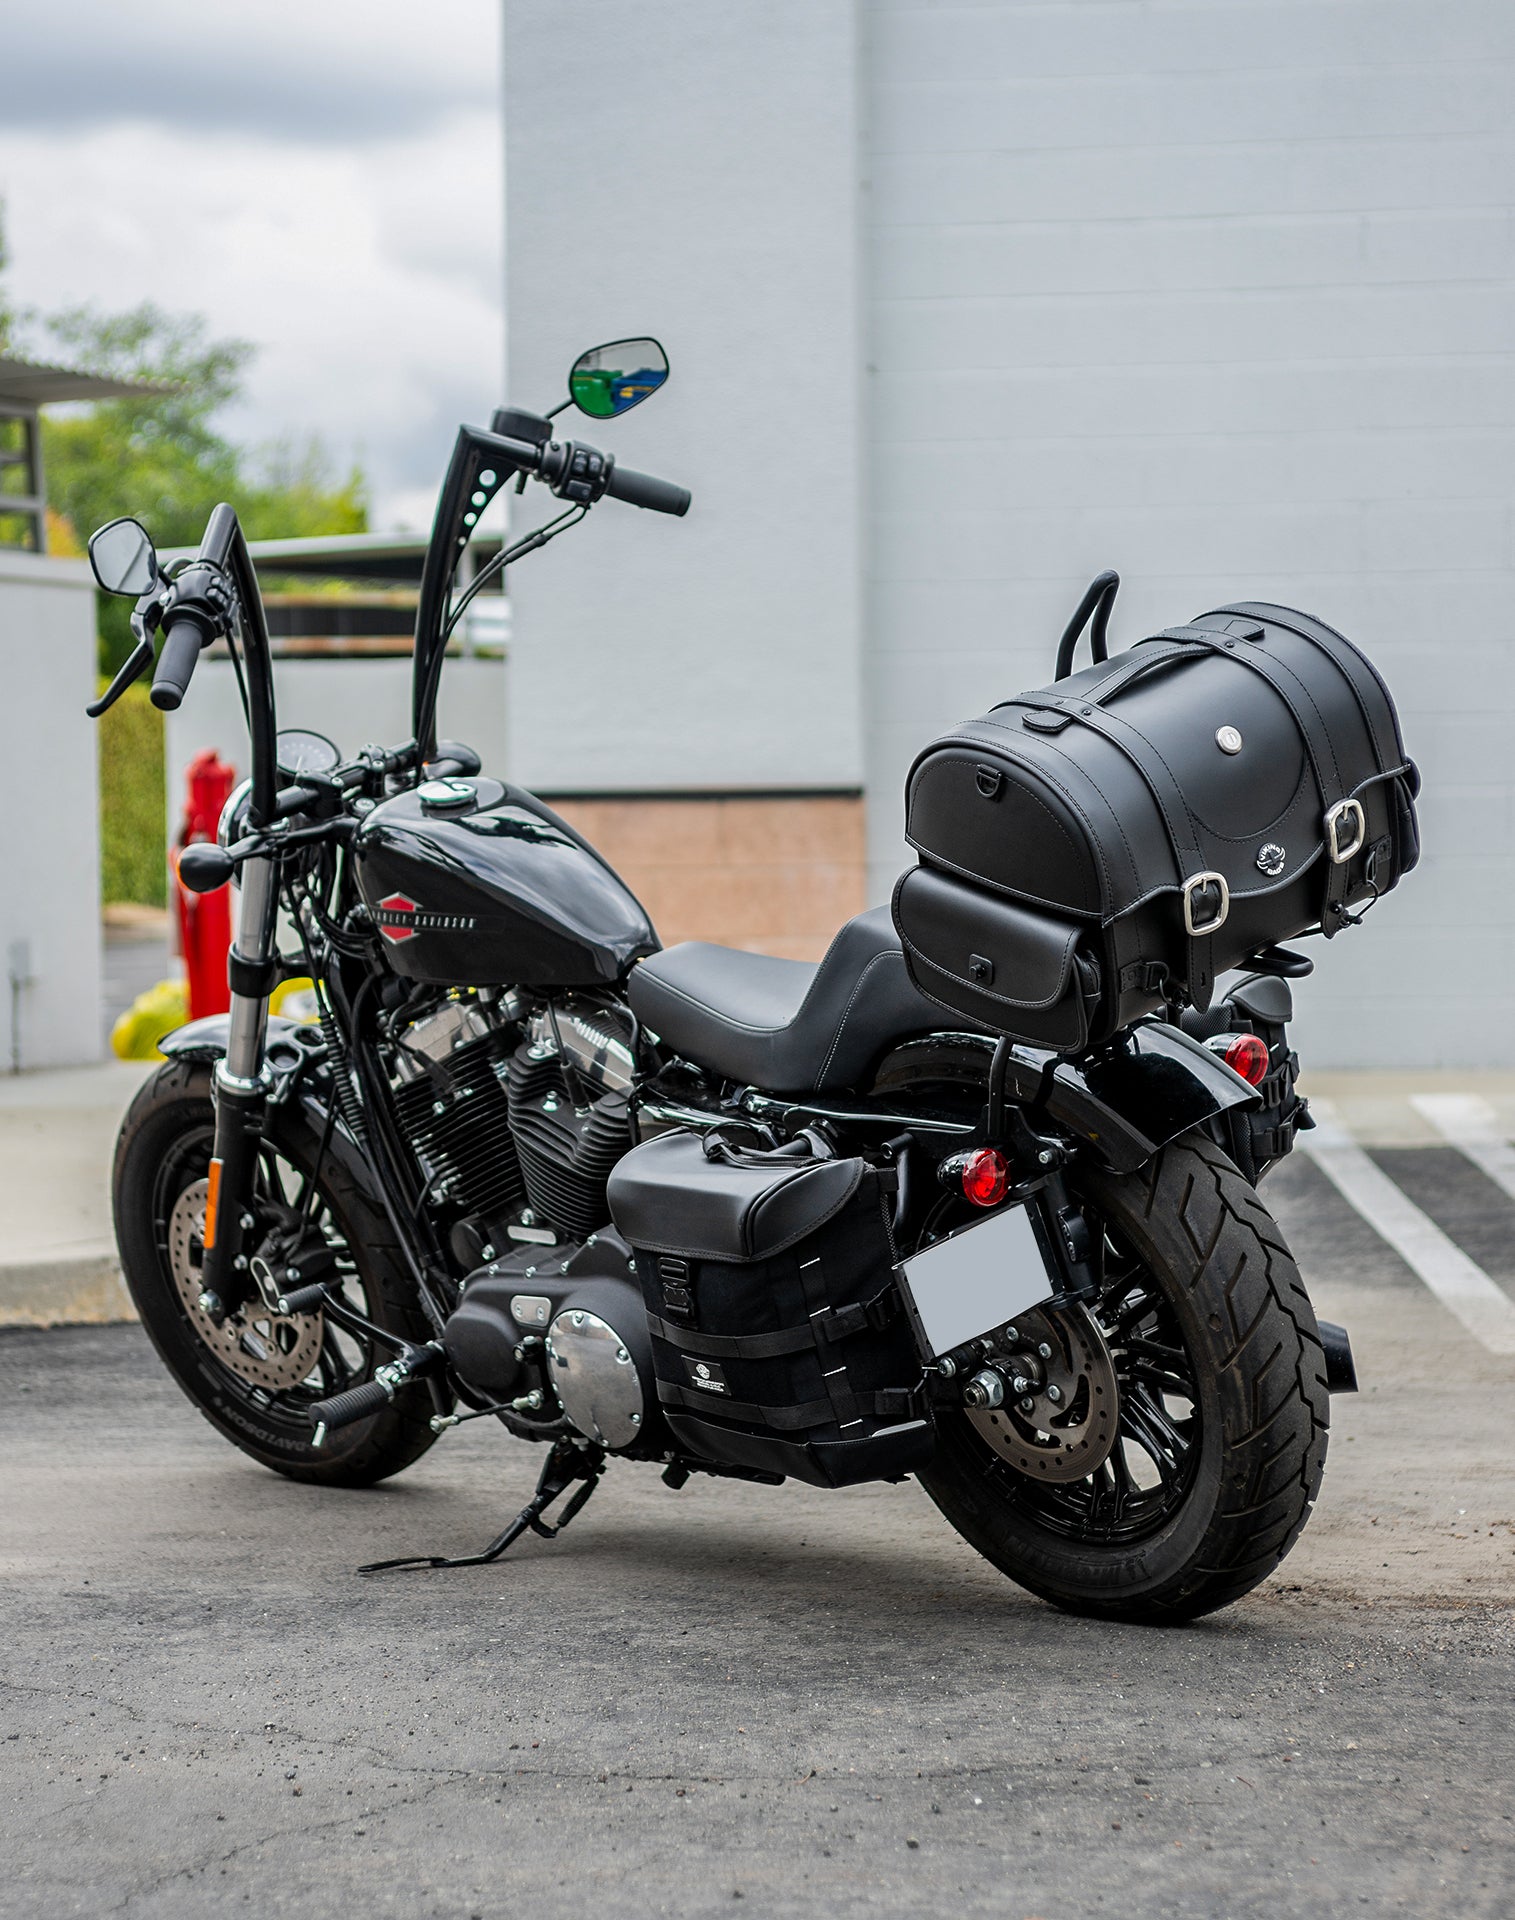 18L - Century Medium Honda Leather Motorcycle Tail Bag